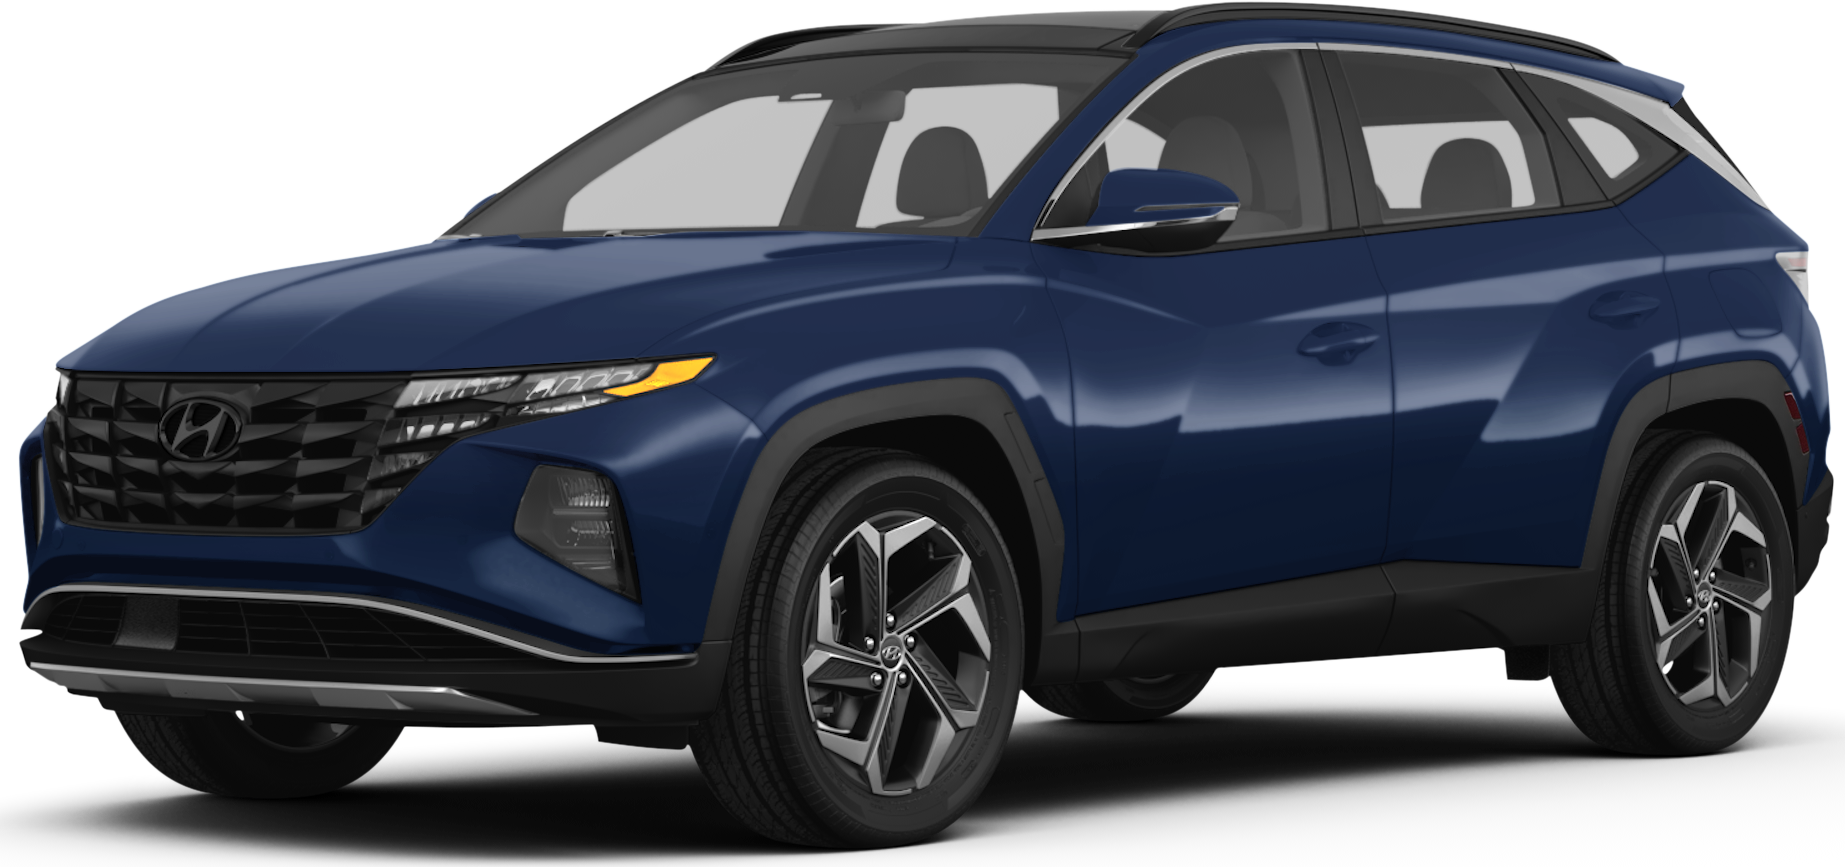 Hyundai Tucson - Consumer Reports